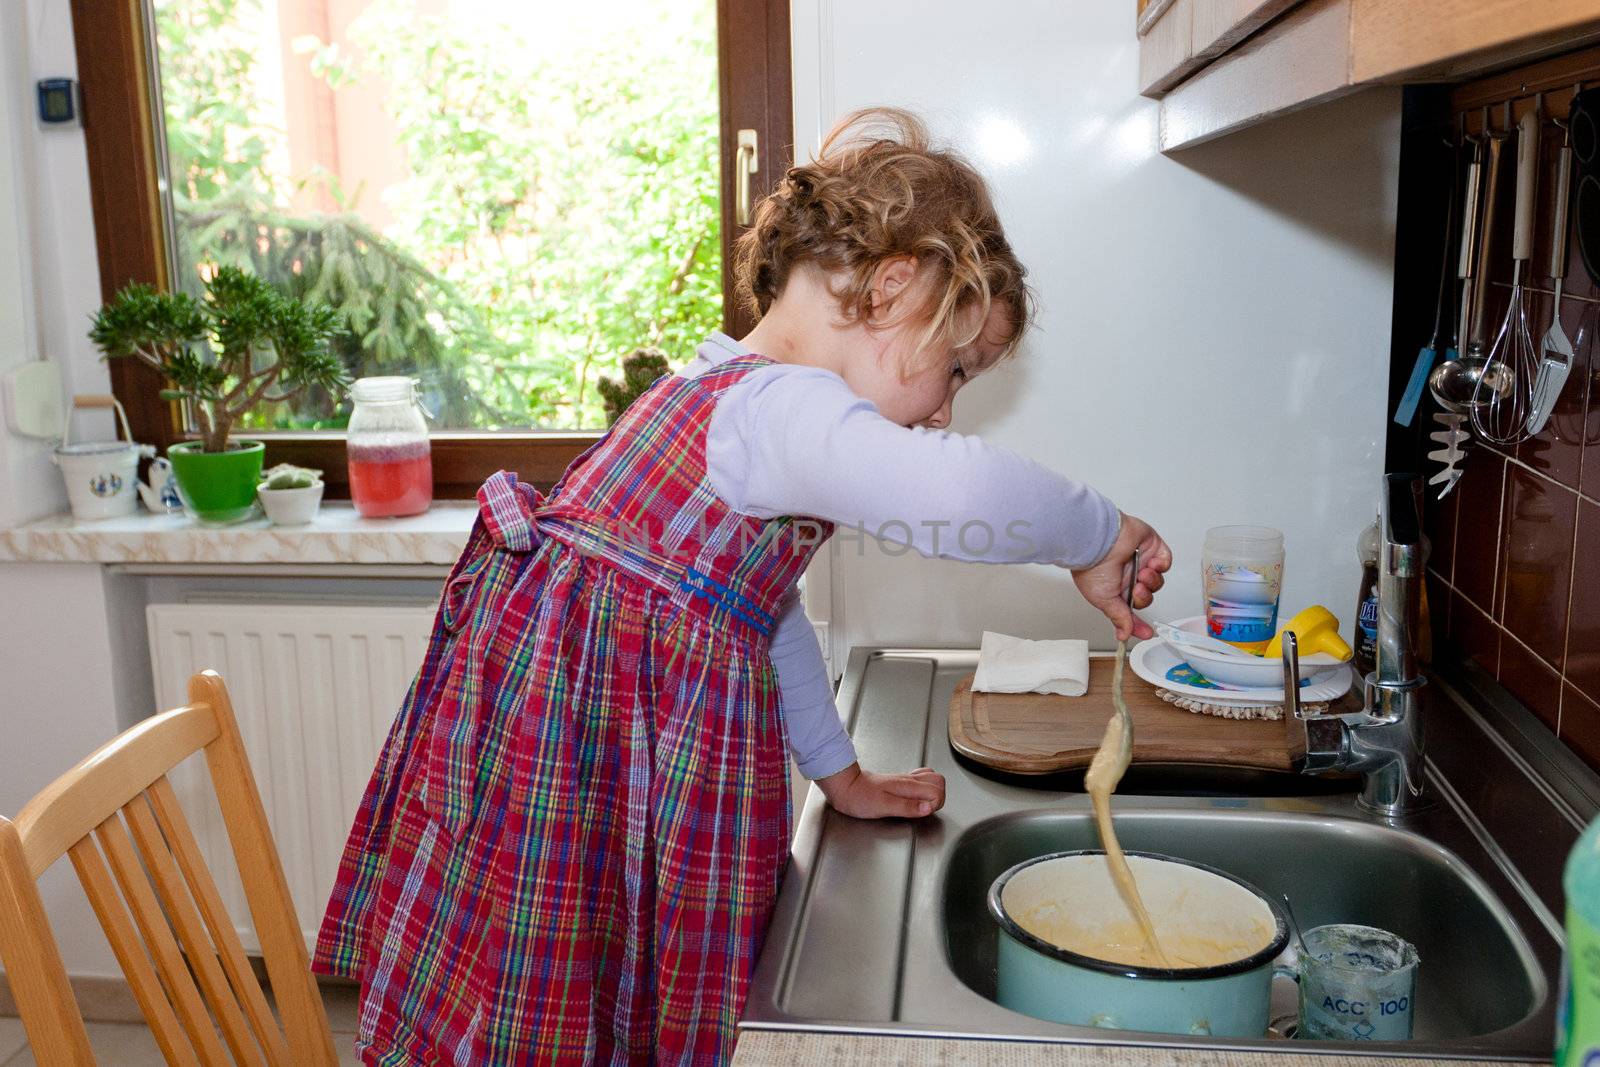 Baking helper by melastmohican